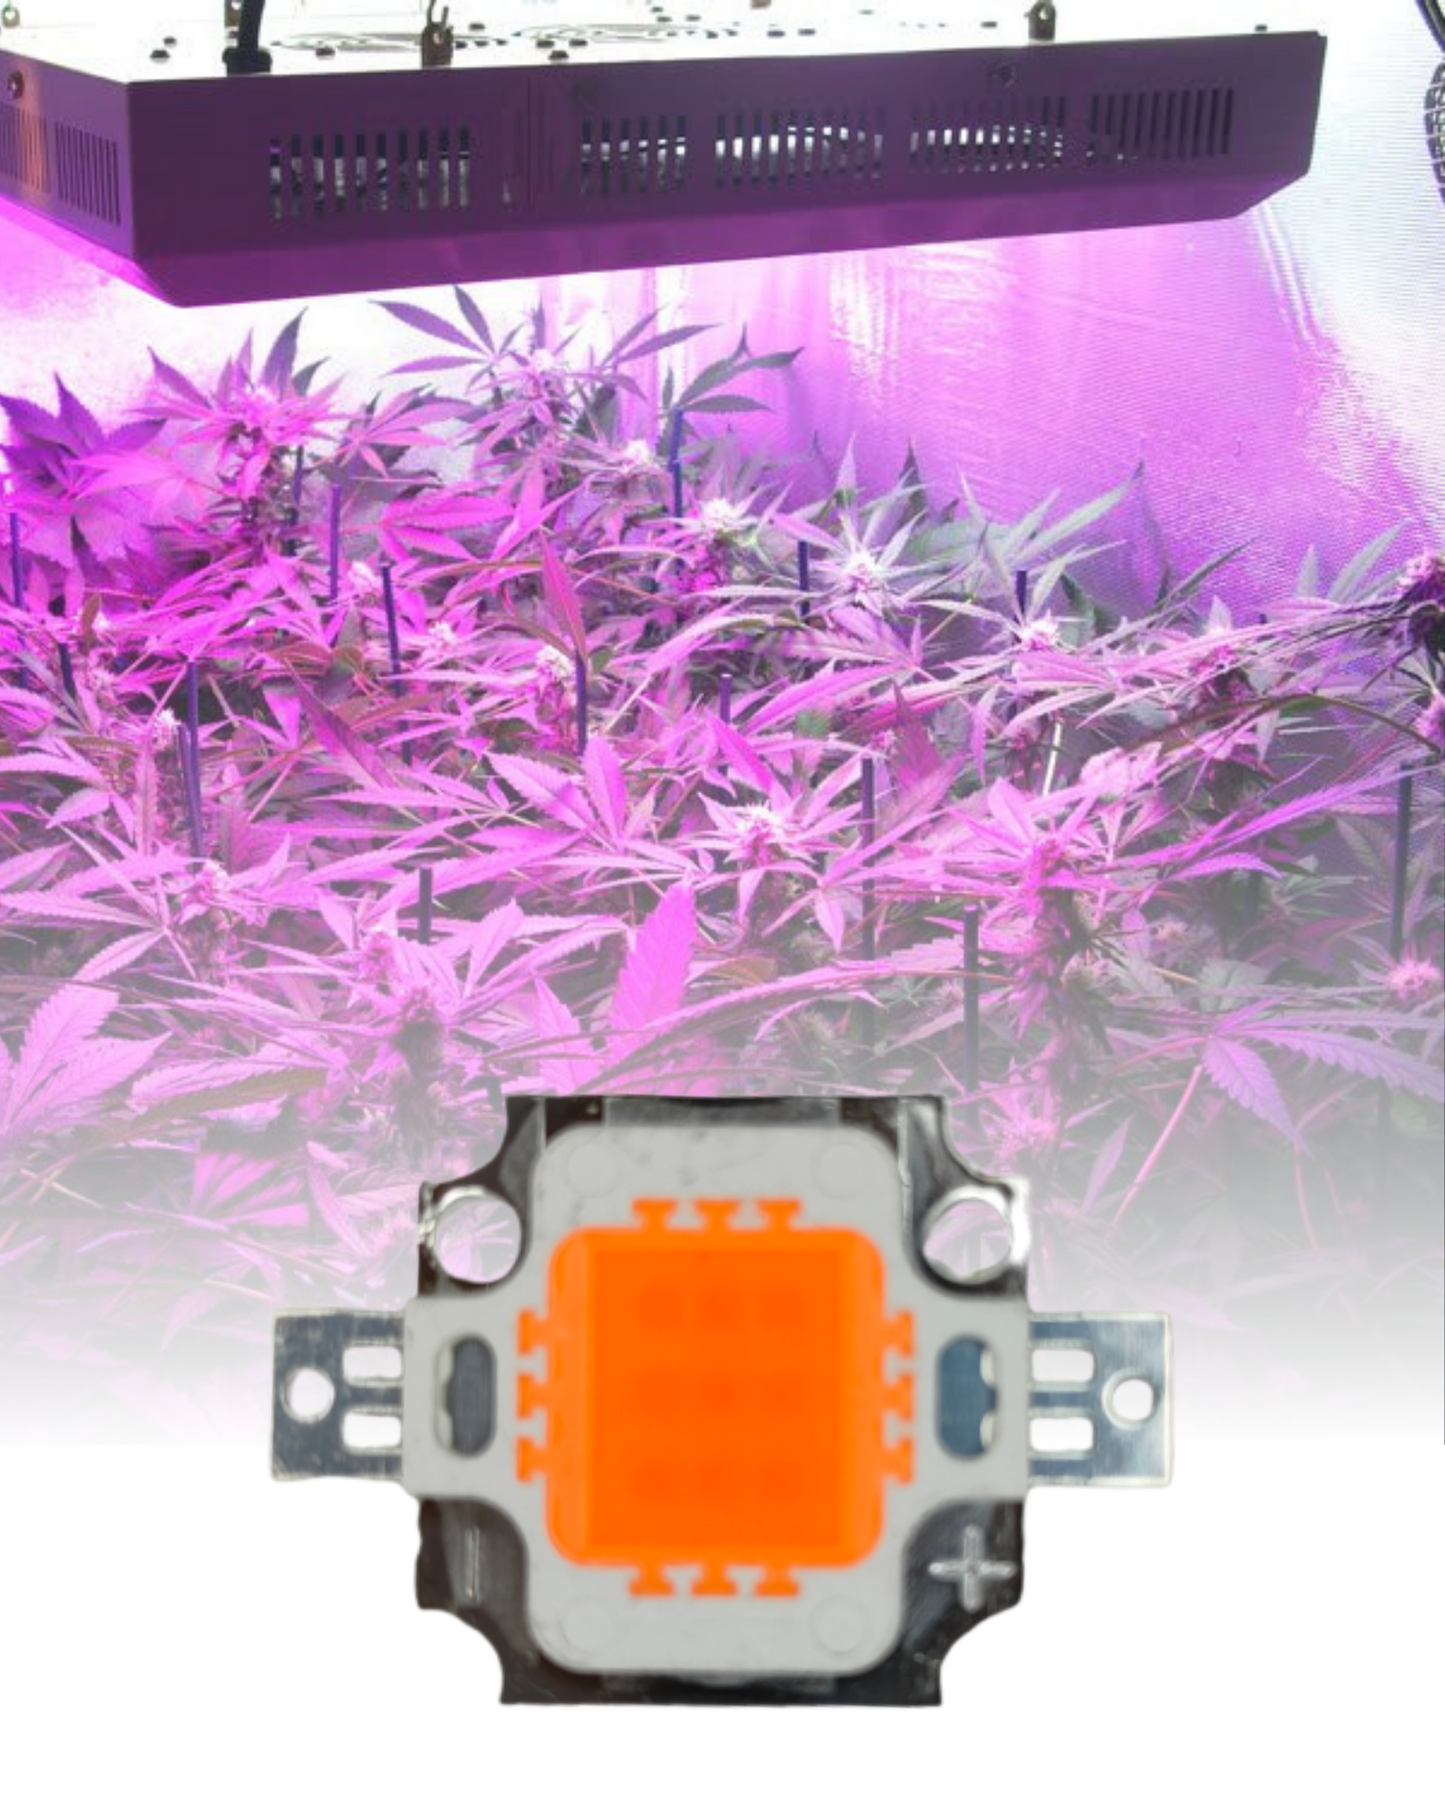 Chip LED de potencia 10w para Cultivo de plantas | Full spectrum | Espectro completo para invernadero